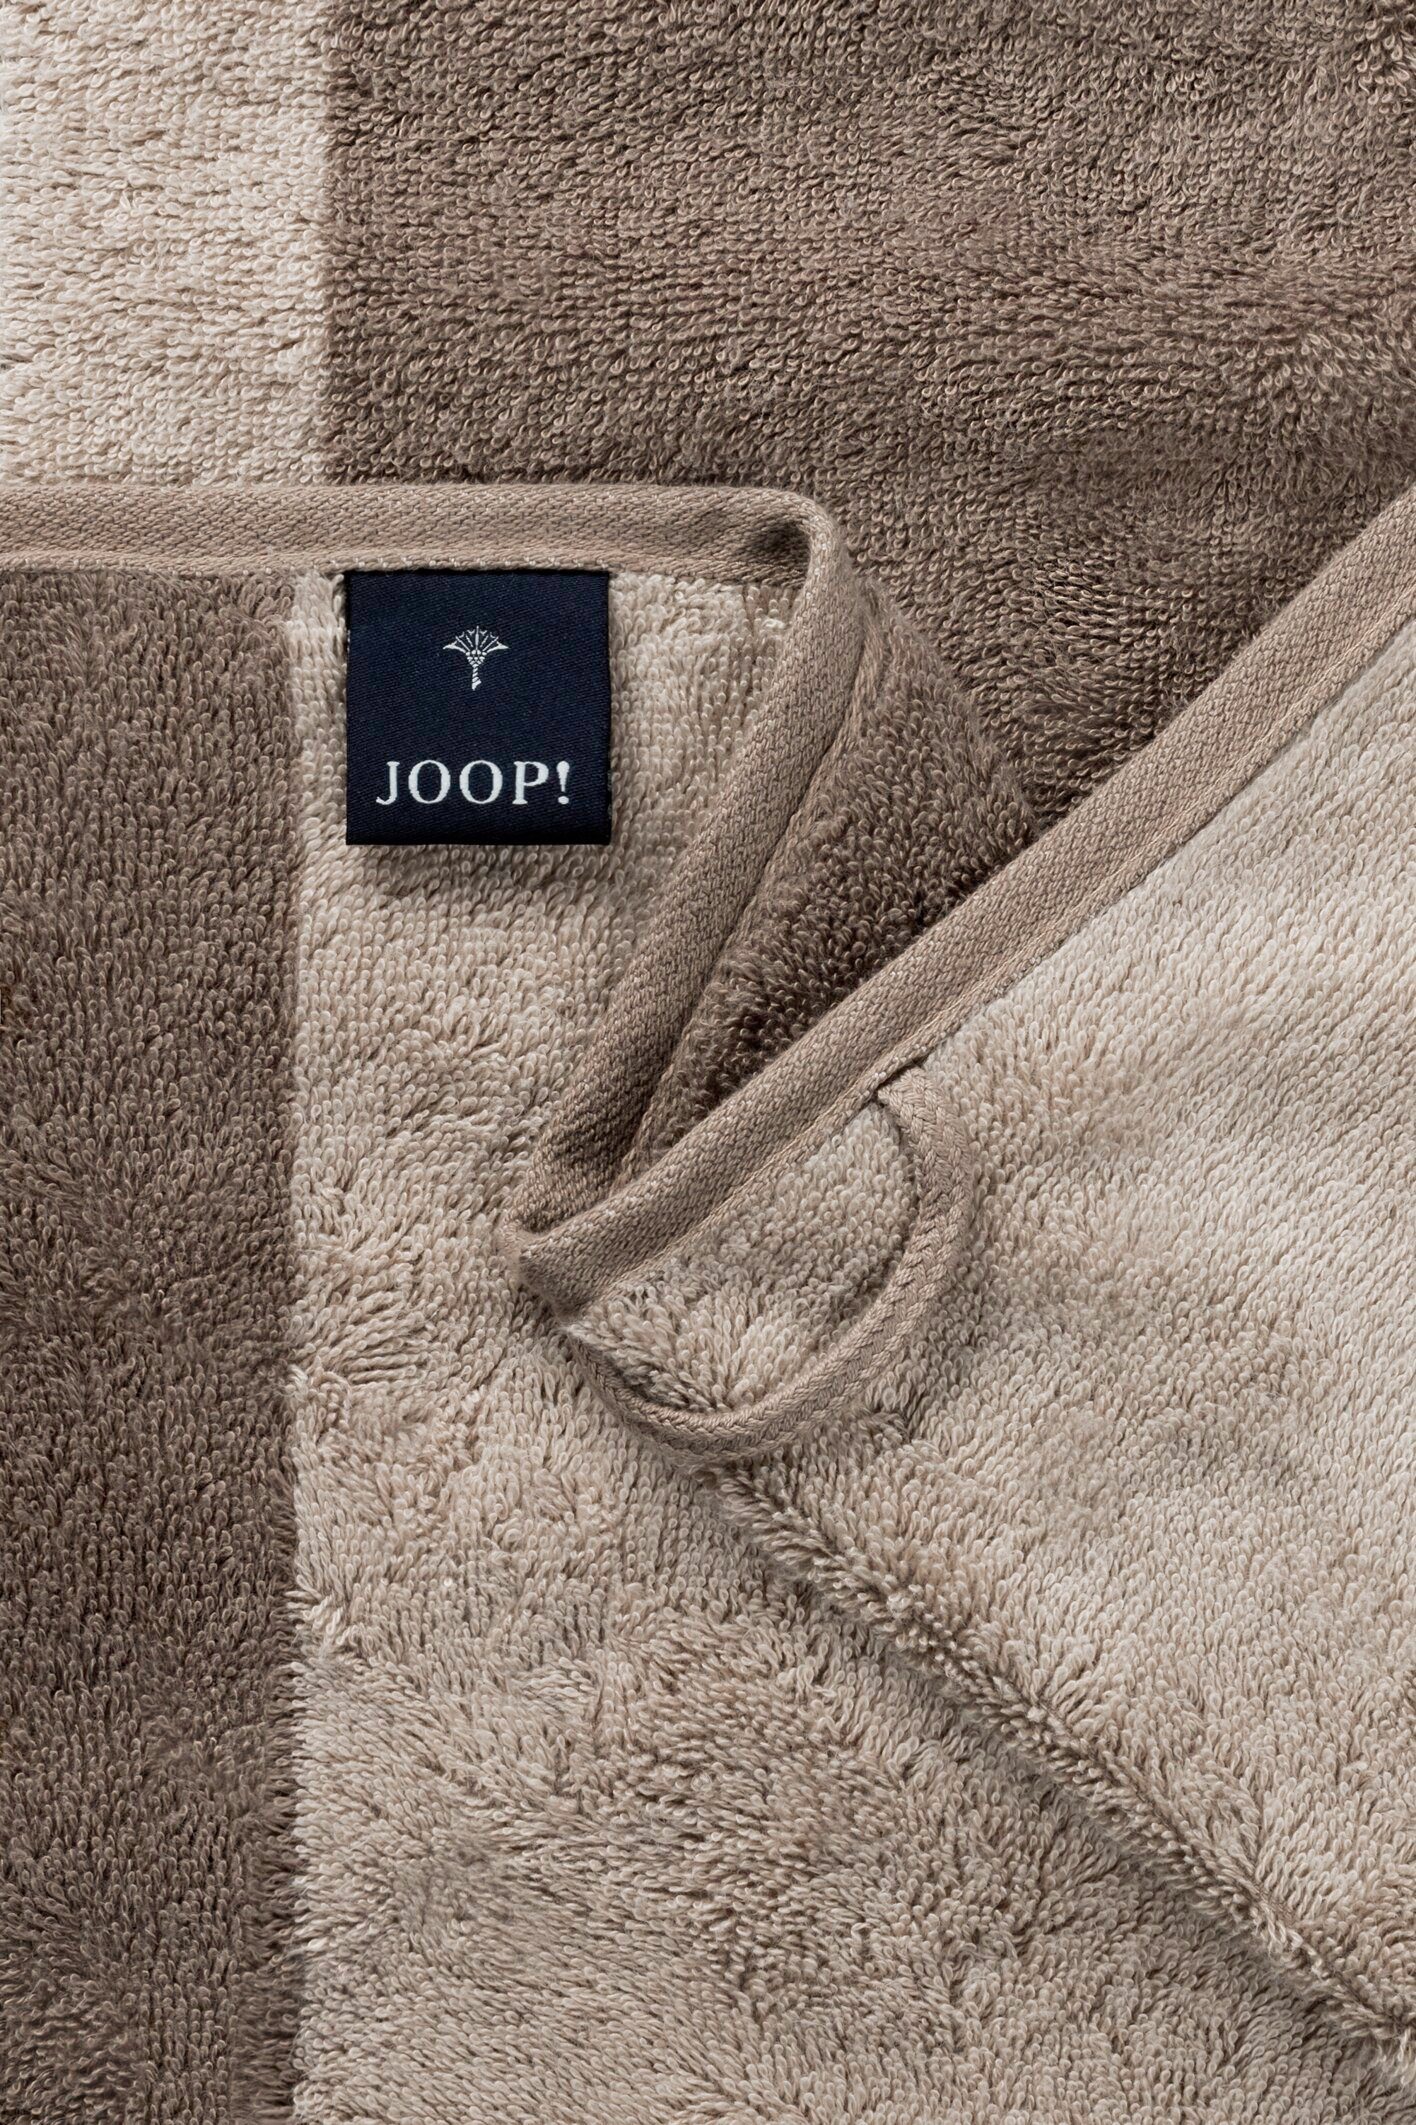 LIVING STRIPES Textil Handtuch-Set, TONE Handtücher JOOP! - (2-St) Sand Joop!